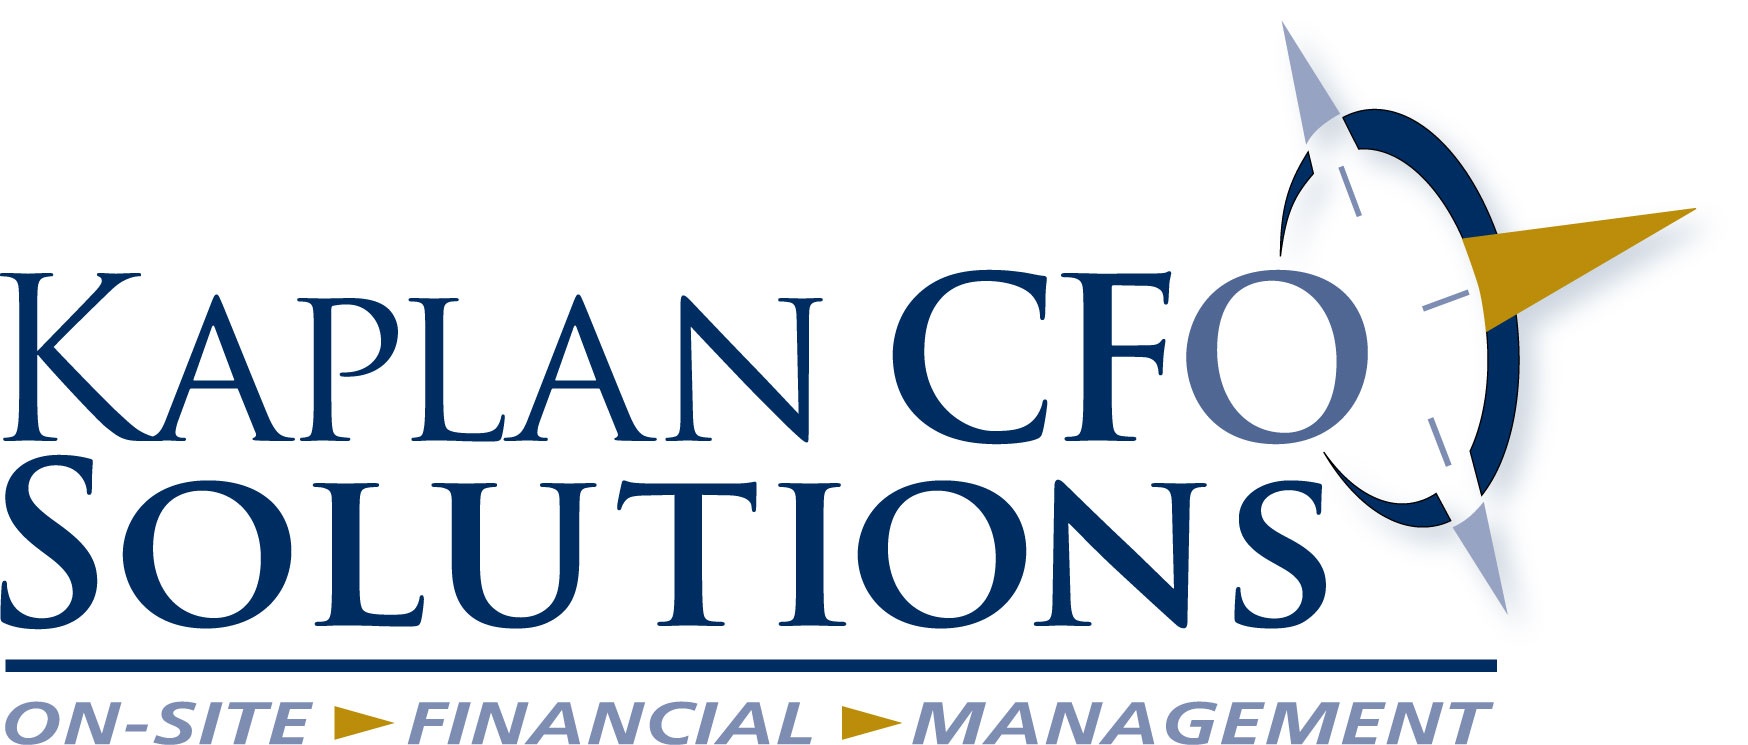 Kaplan CFO Solutions